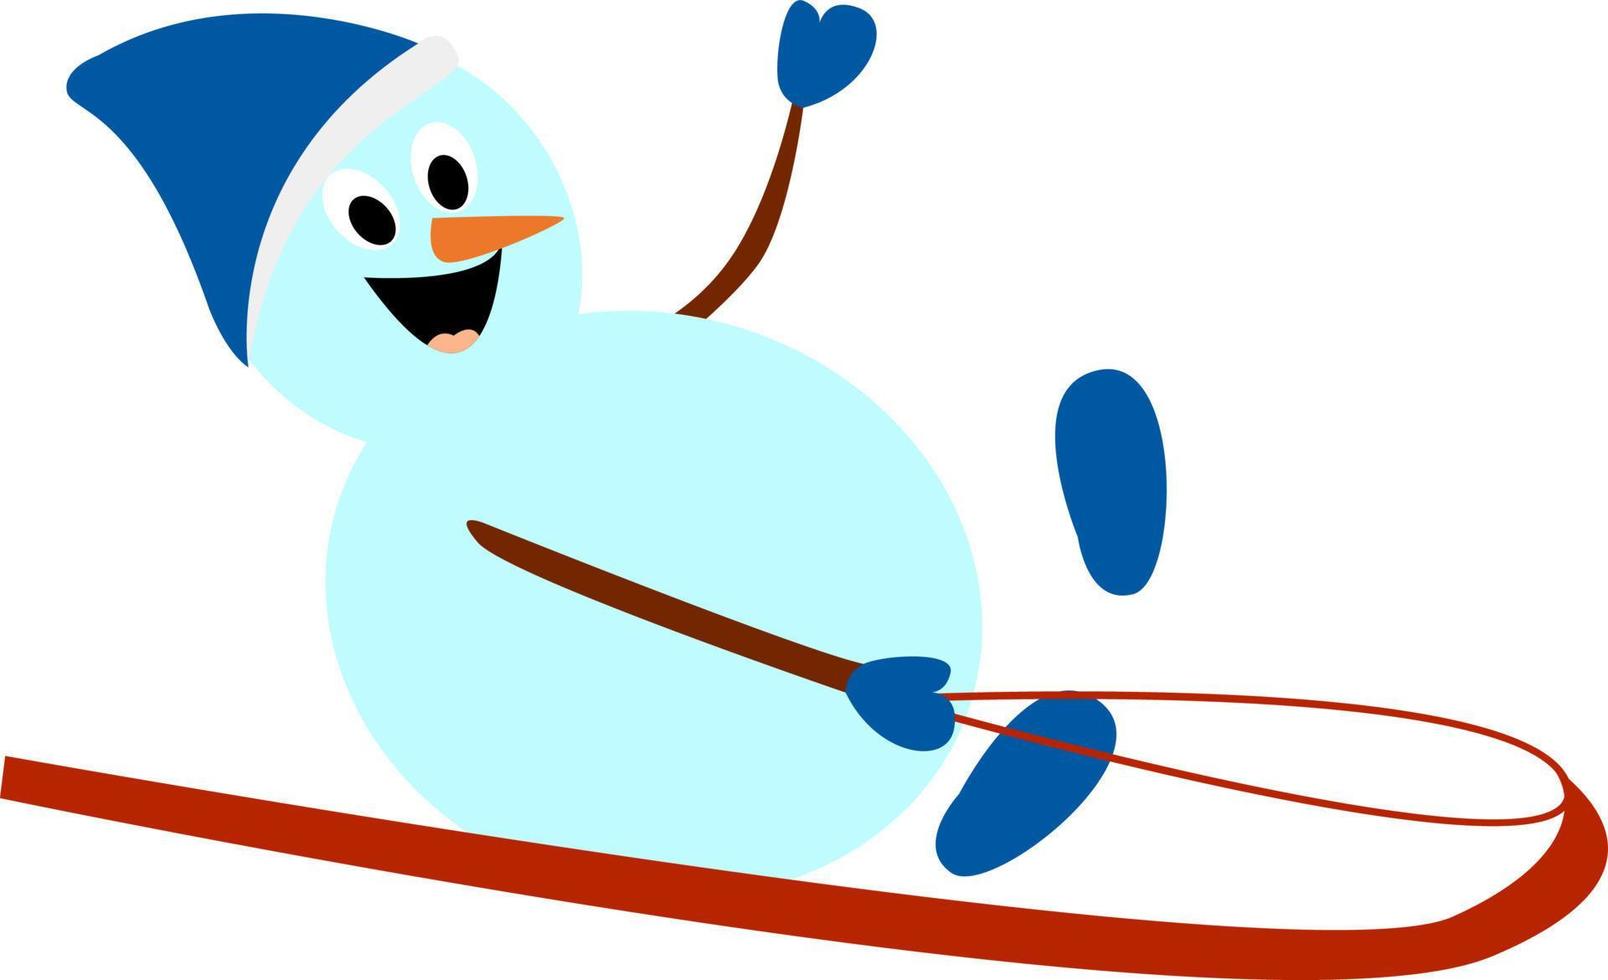 Snowman on sled, illustration, vector on white background.